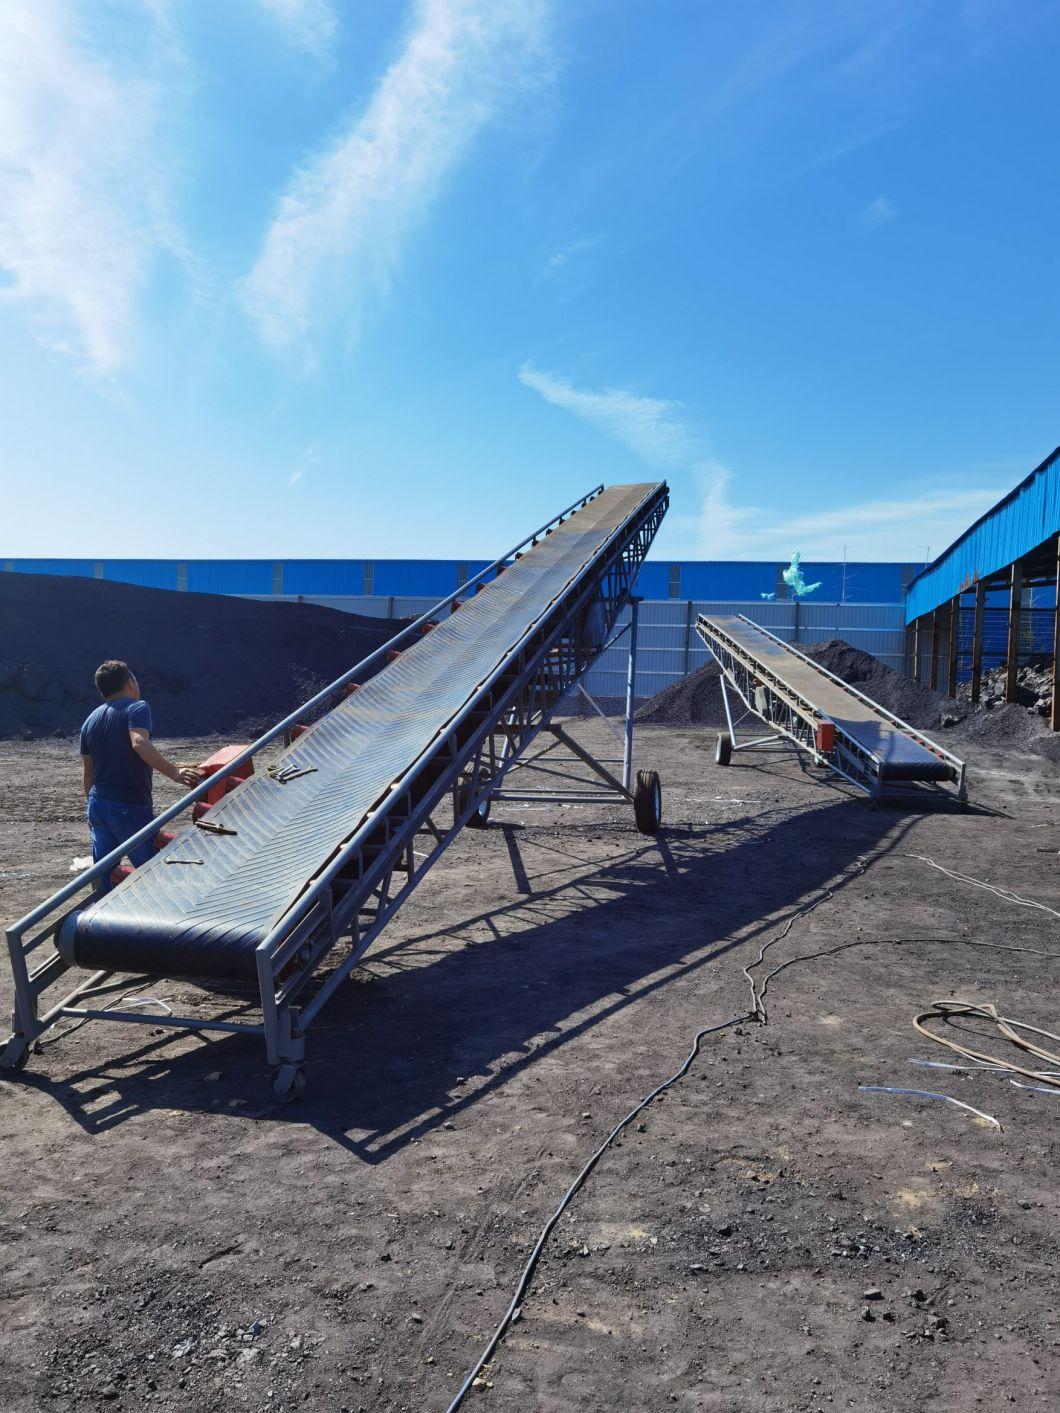 Professional Manufacture Customized Industrial Belt Conveyor for Coal Mine